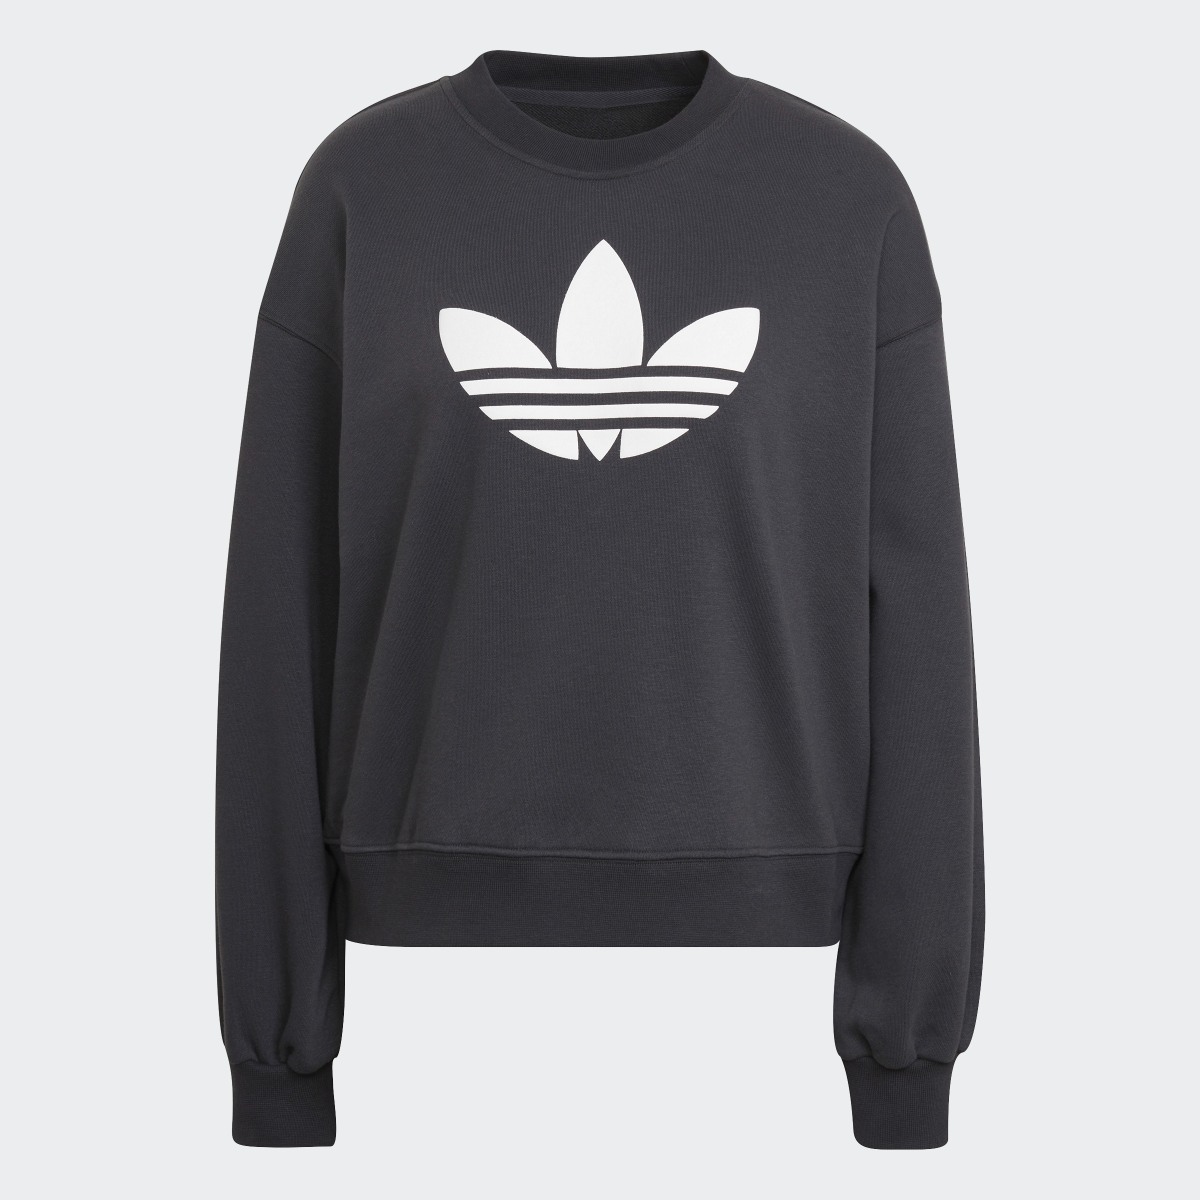 Adidas Crew Sweatshirt. 5